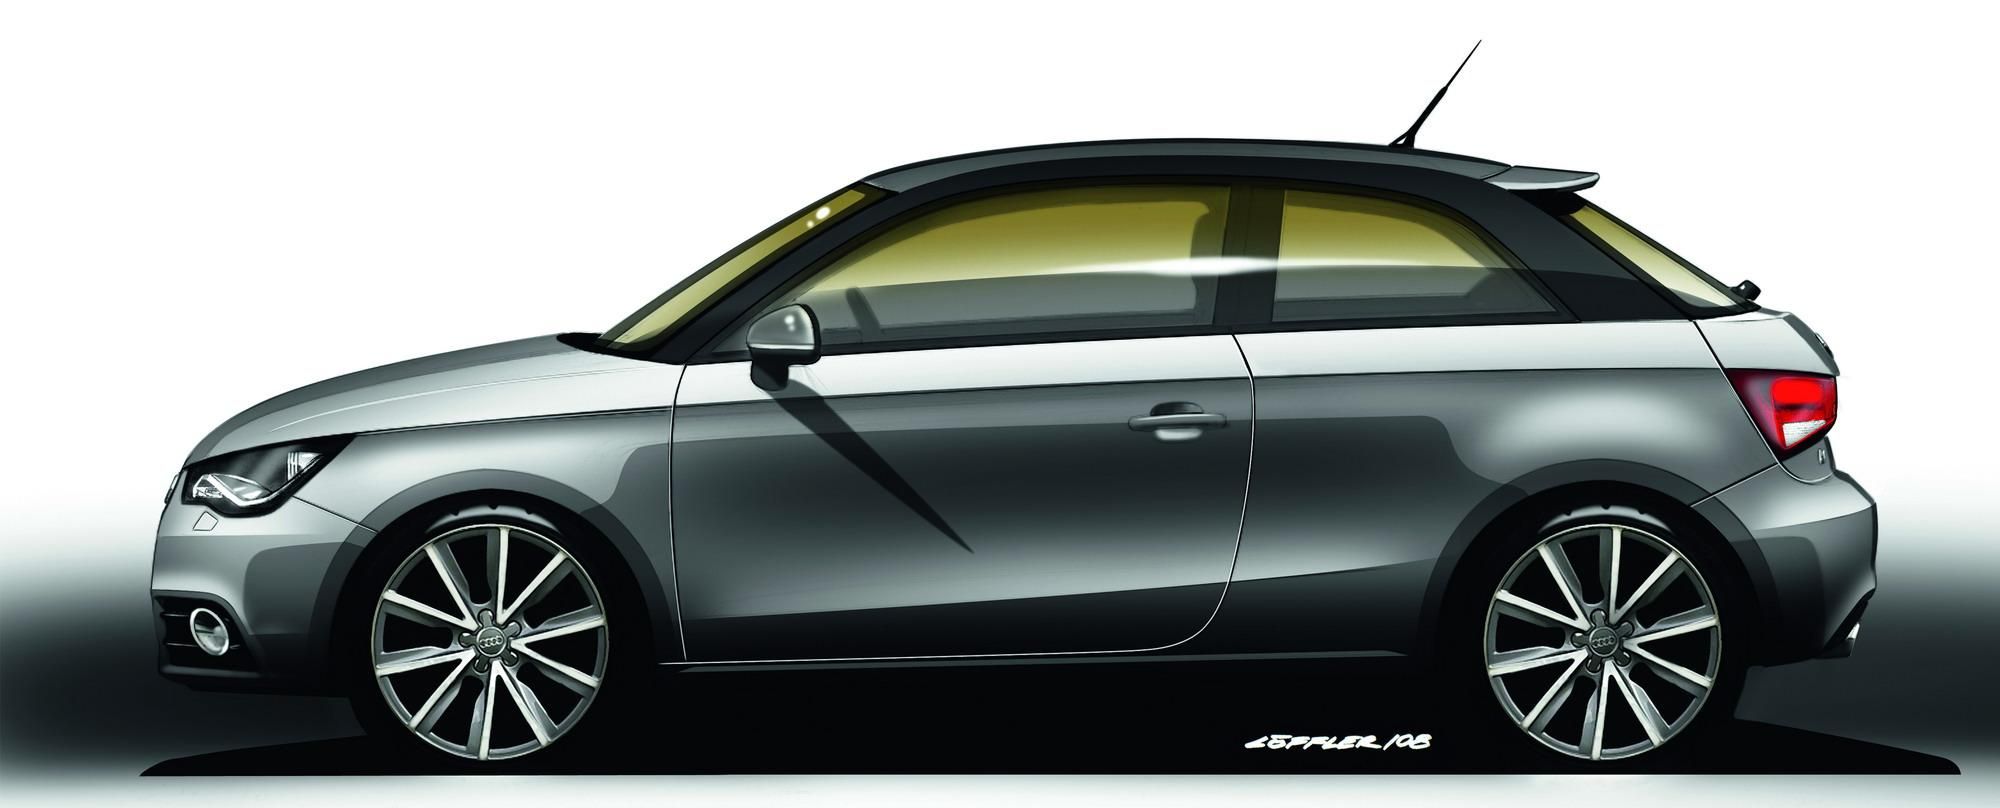 2011 Audi A1